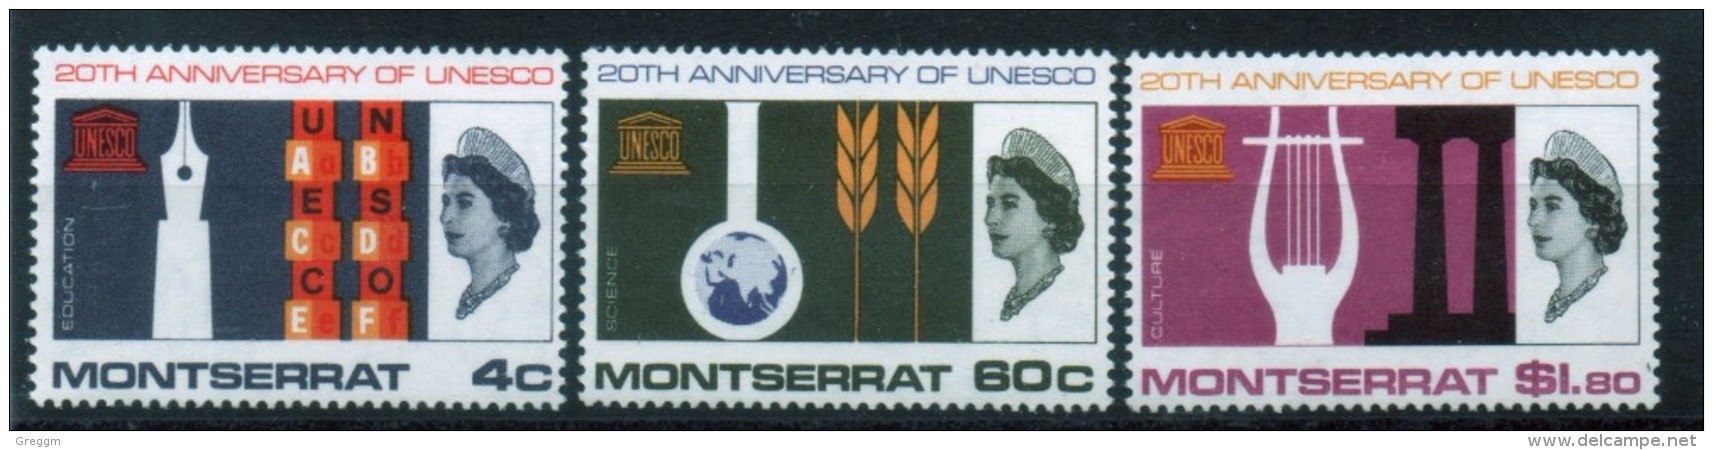 Montserrat Set Of Unmounted Mint Stamps To Celebrate The 20th Anniversary Of Unesco. - Montserrat